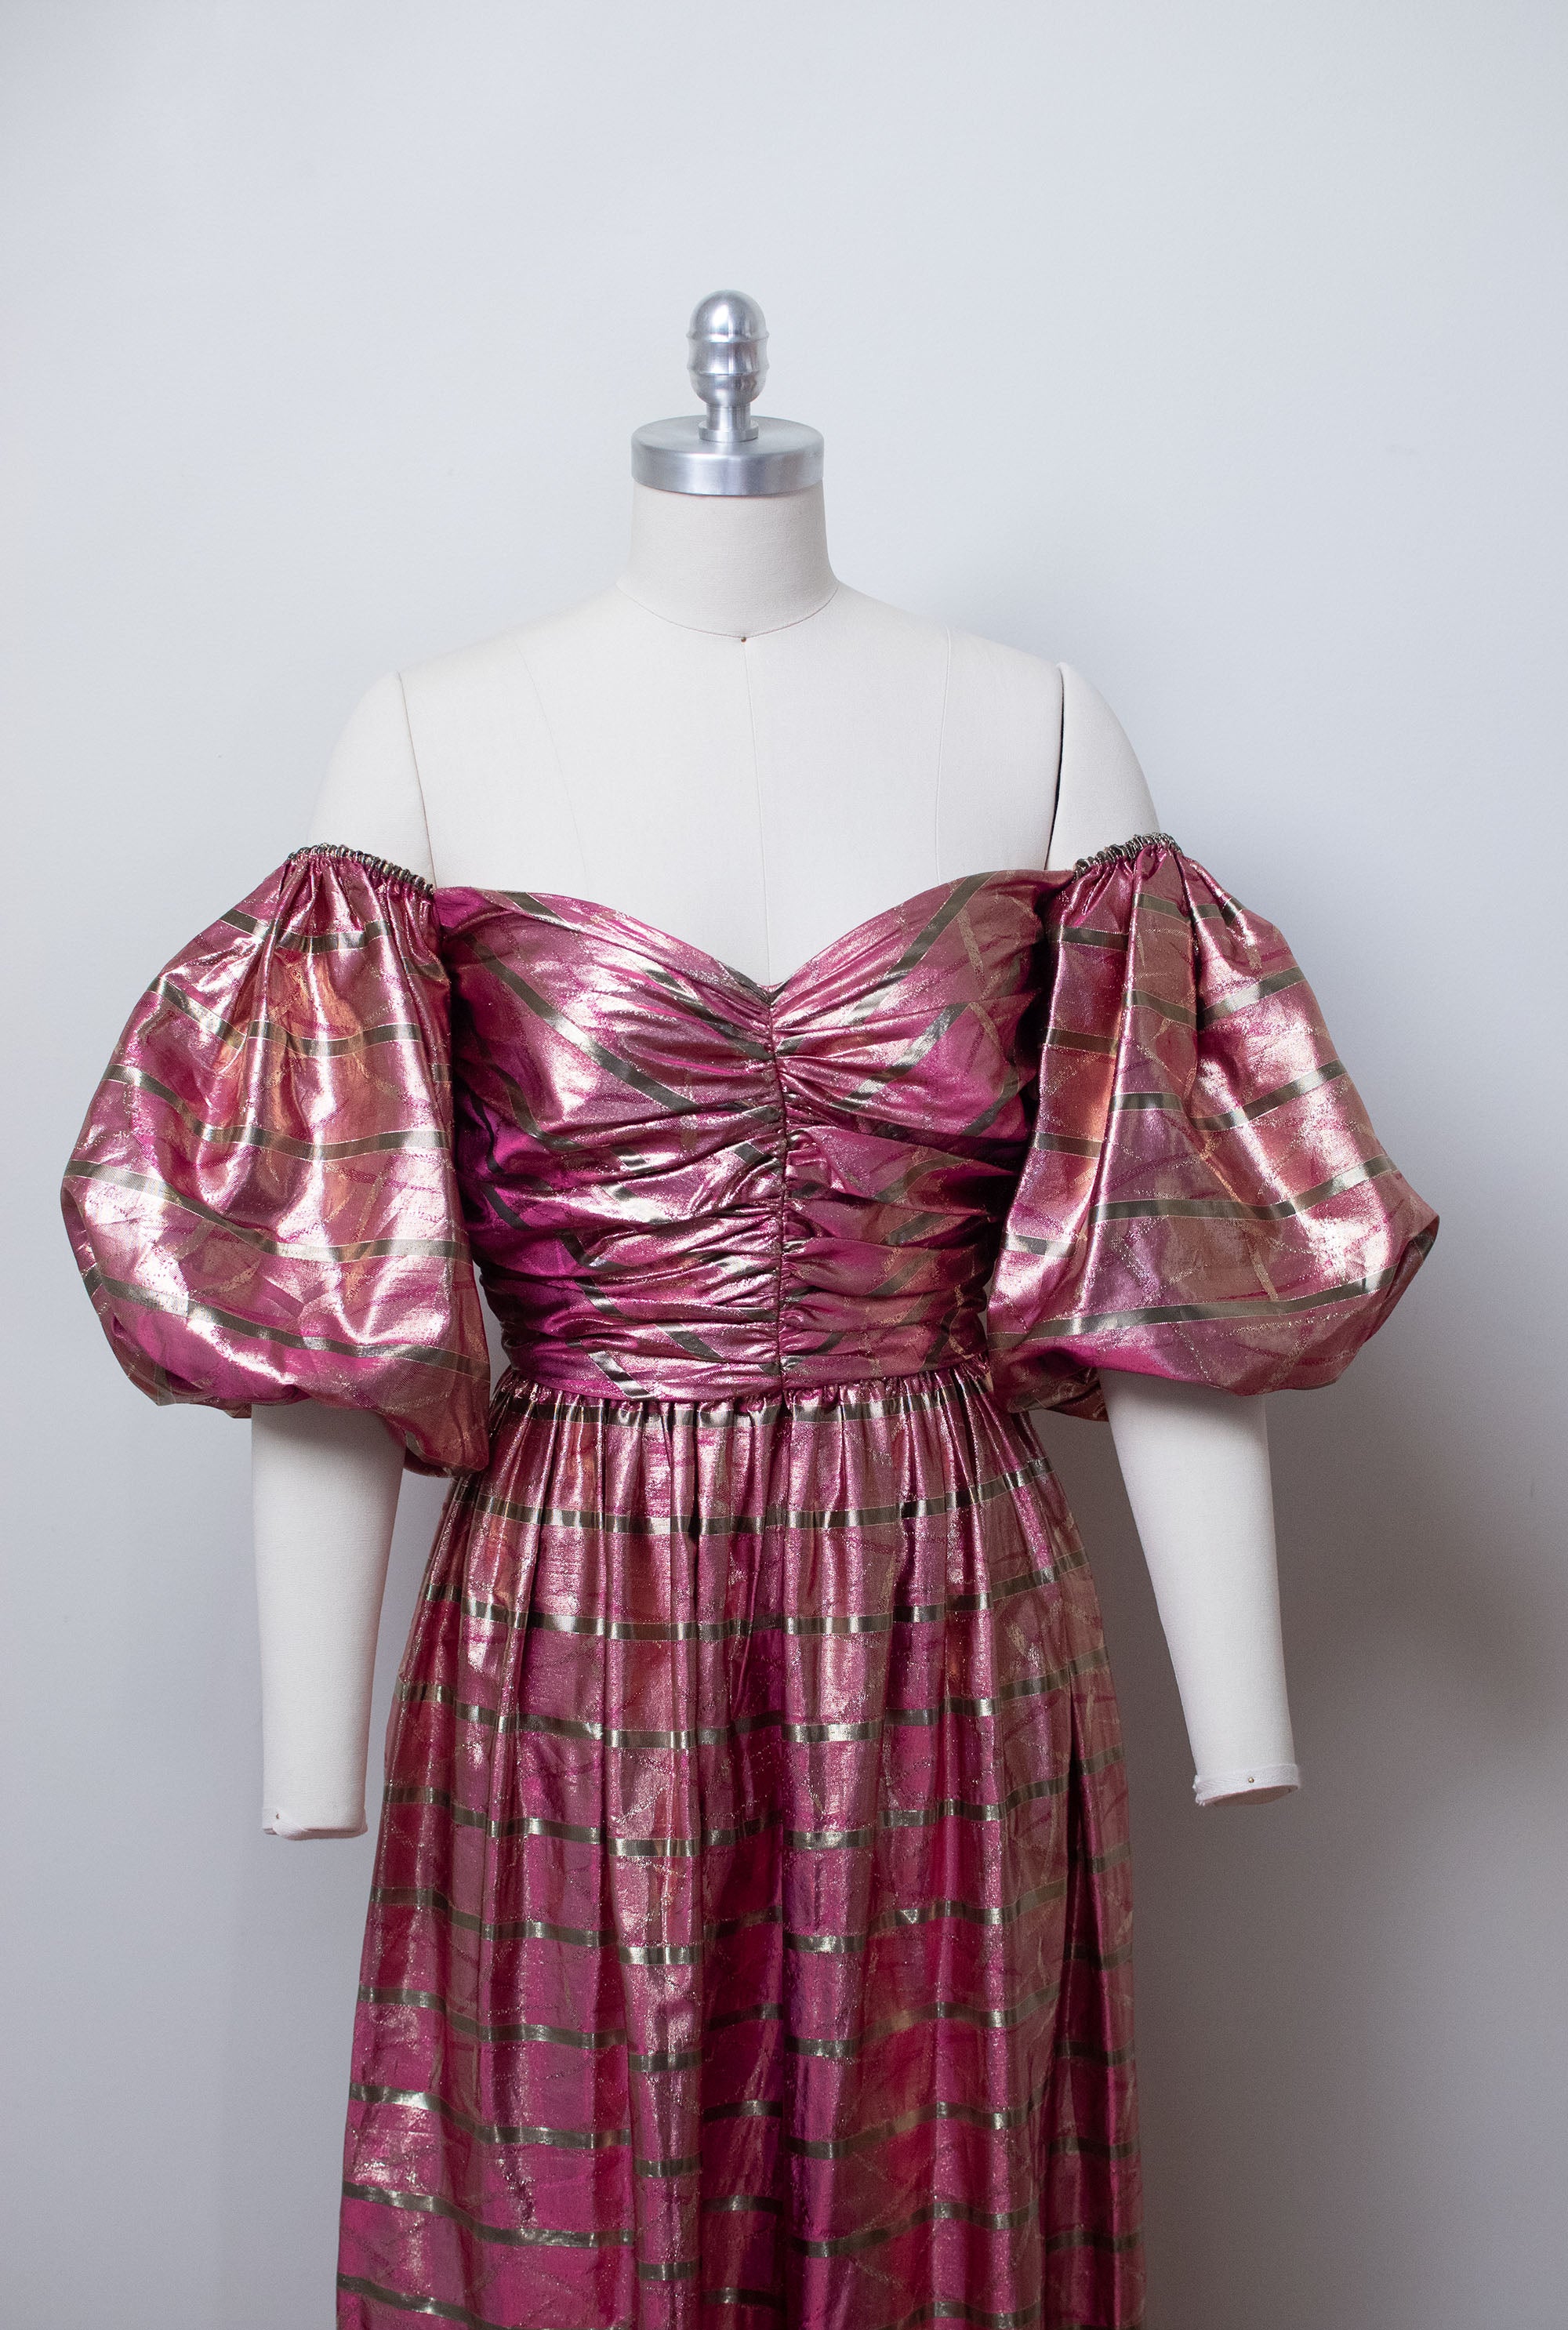 1980s dress